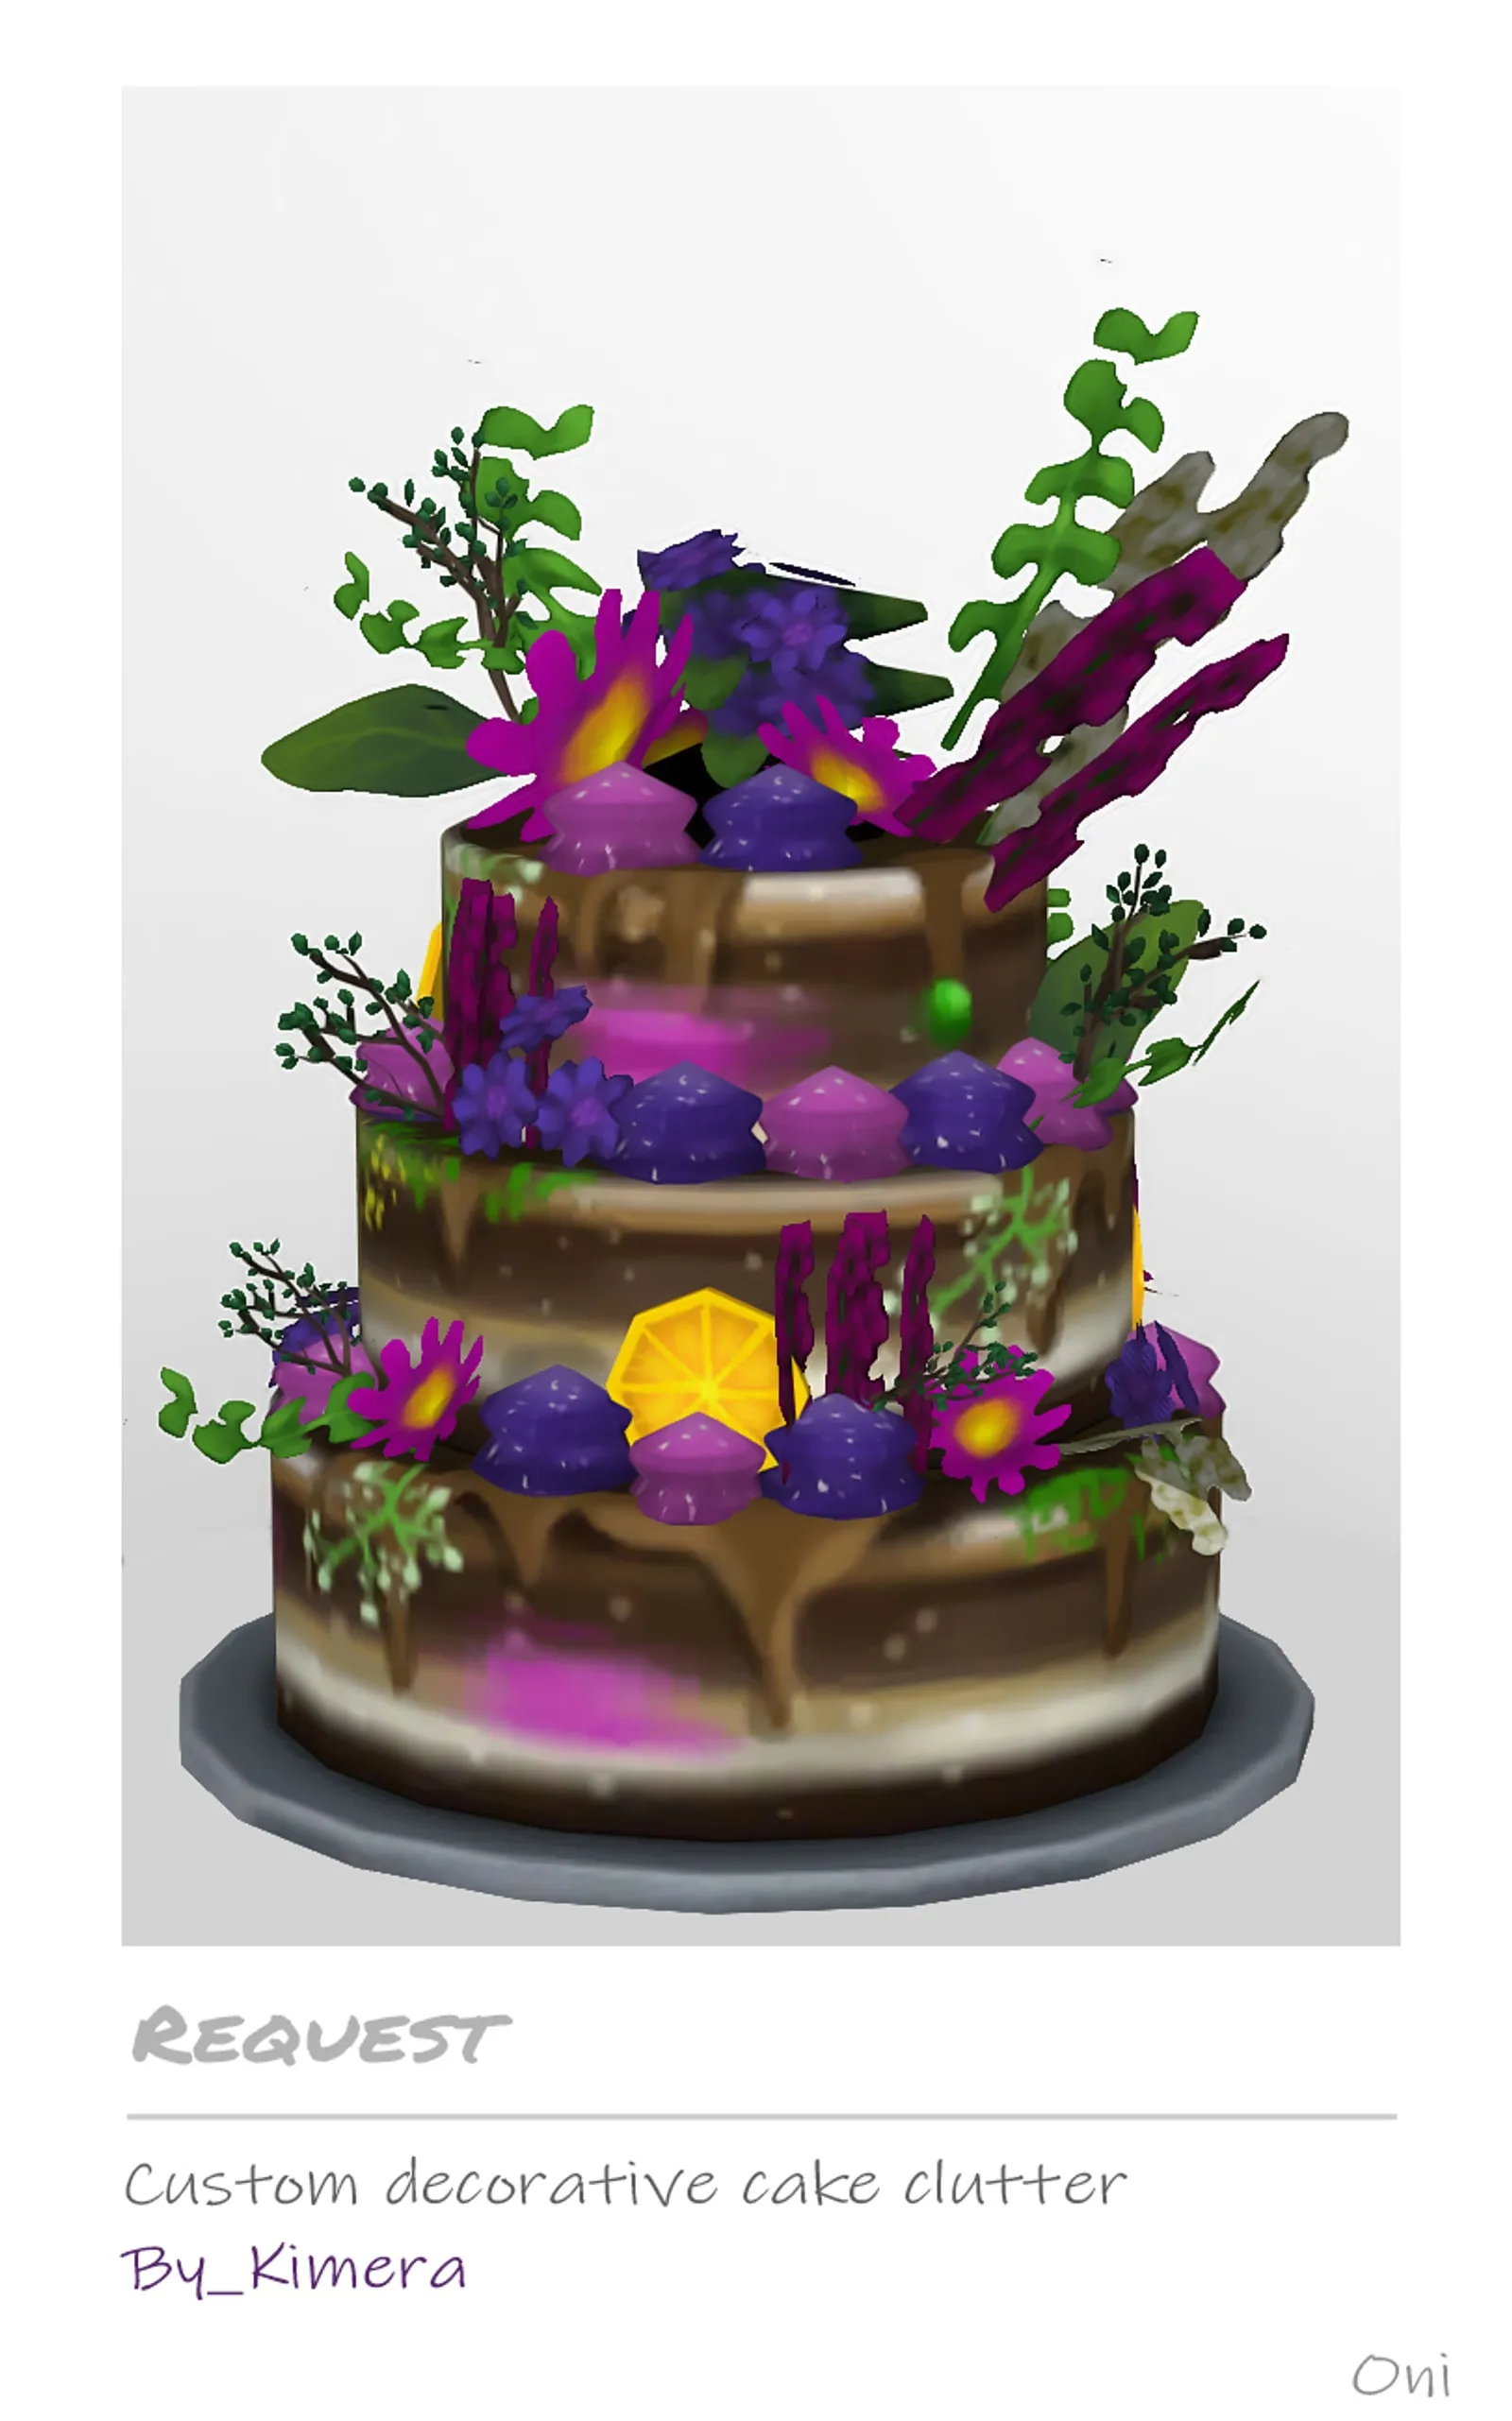 Custom decorative cake _Request  by Kimera